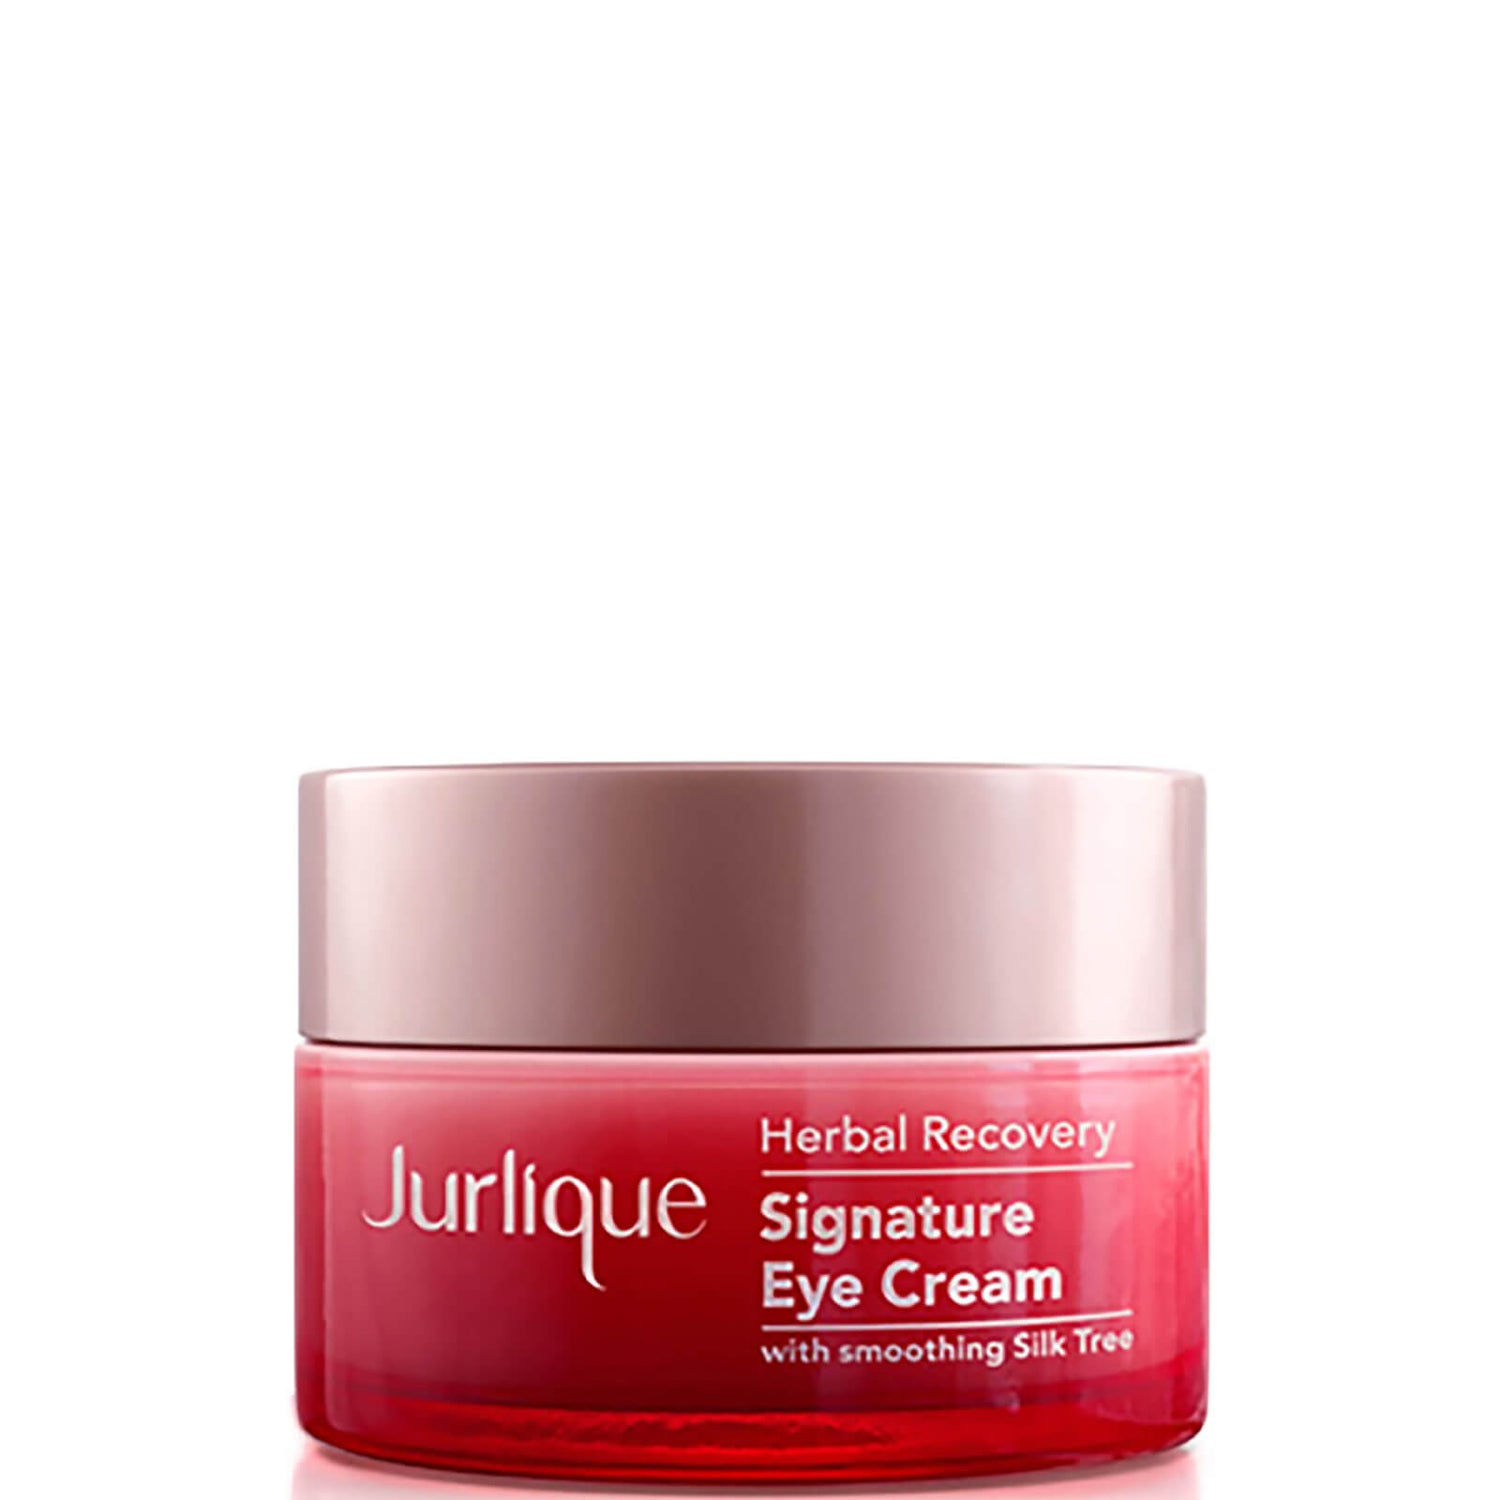 Jurlique Herbal Recovery Signature Eye Cream 15 ml